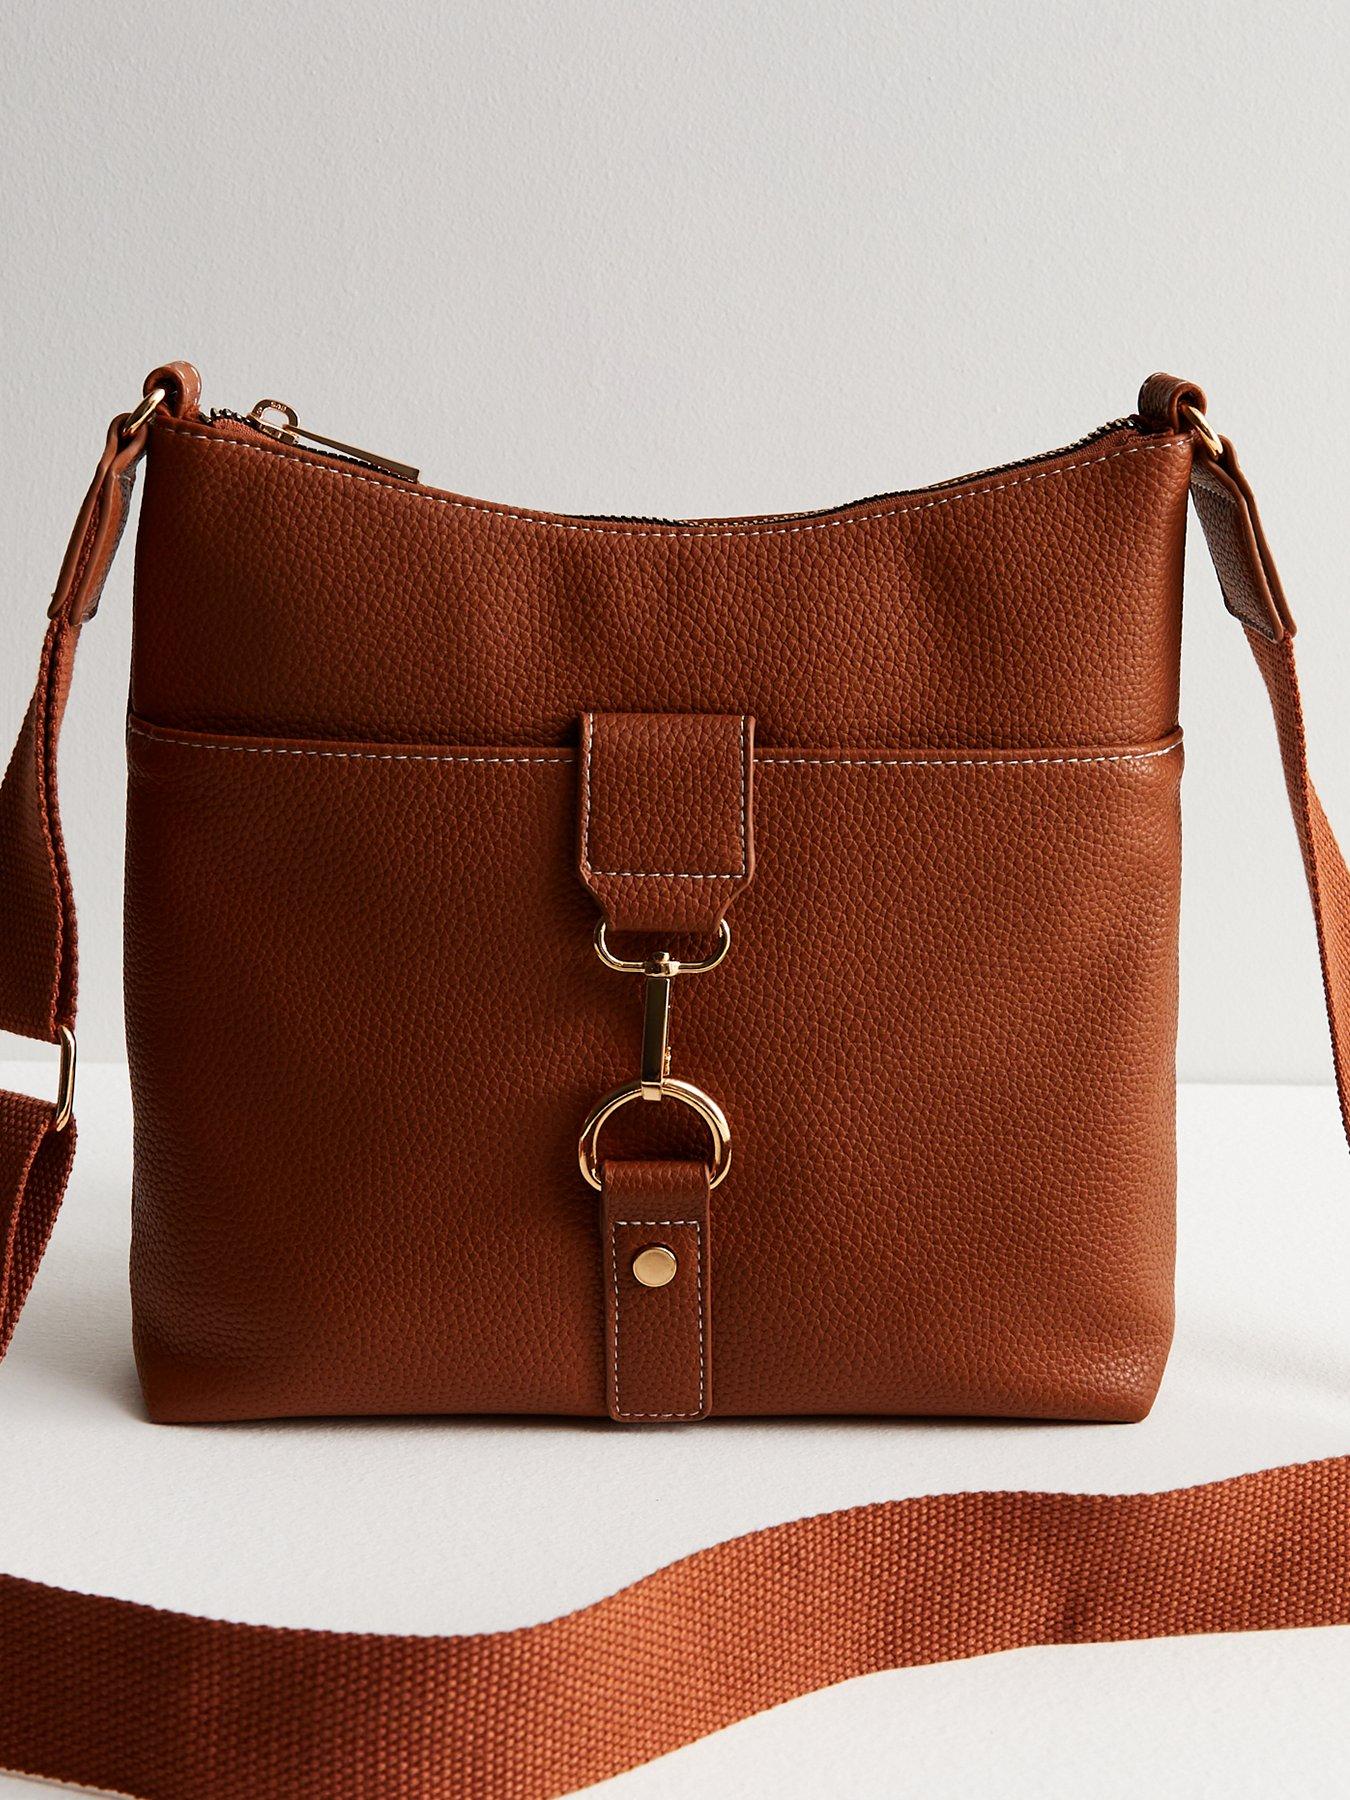 Tabby Shoulder Bag 26 | COACH | Bags, Bags designer fashion, Fancy bags